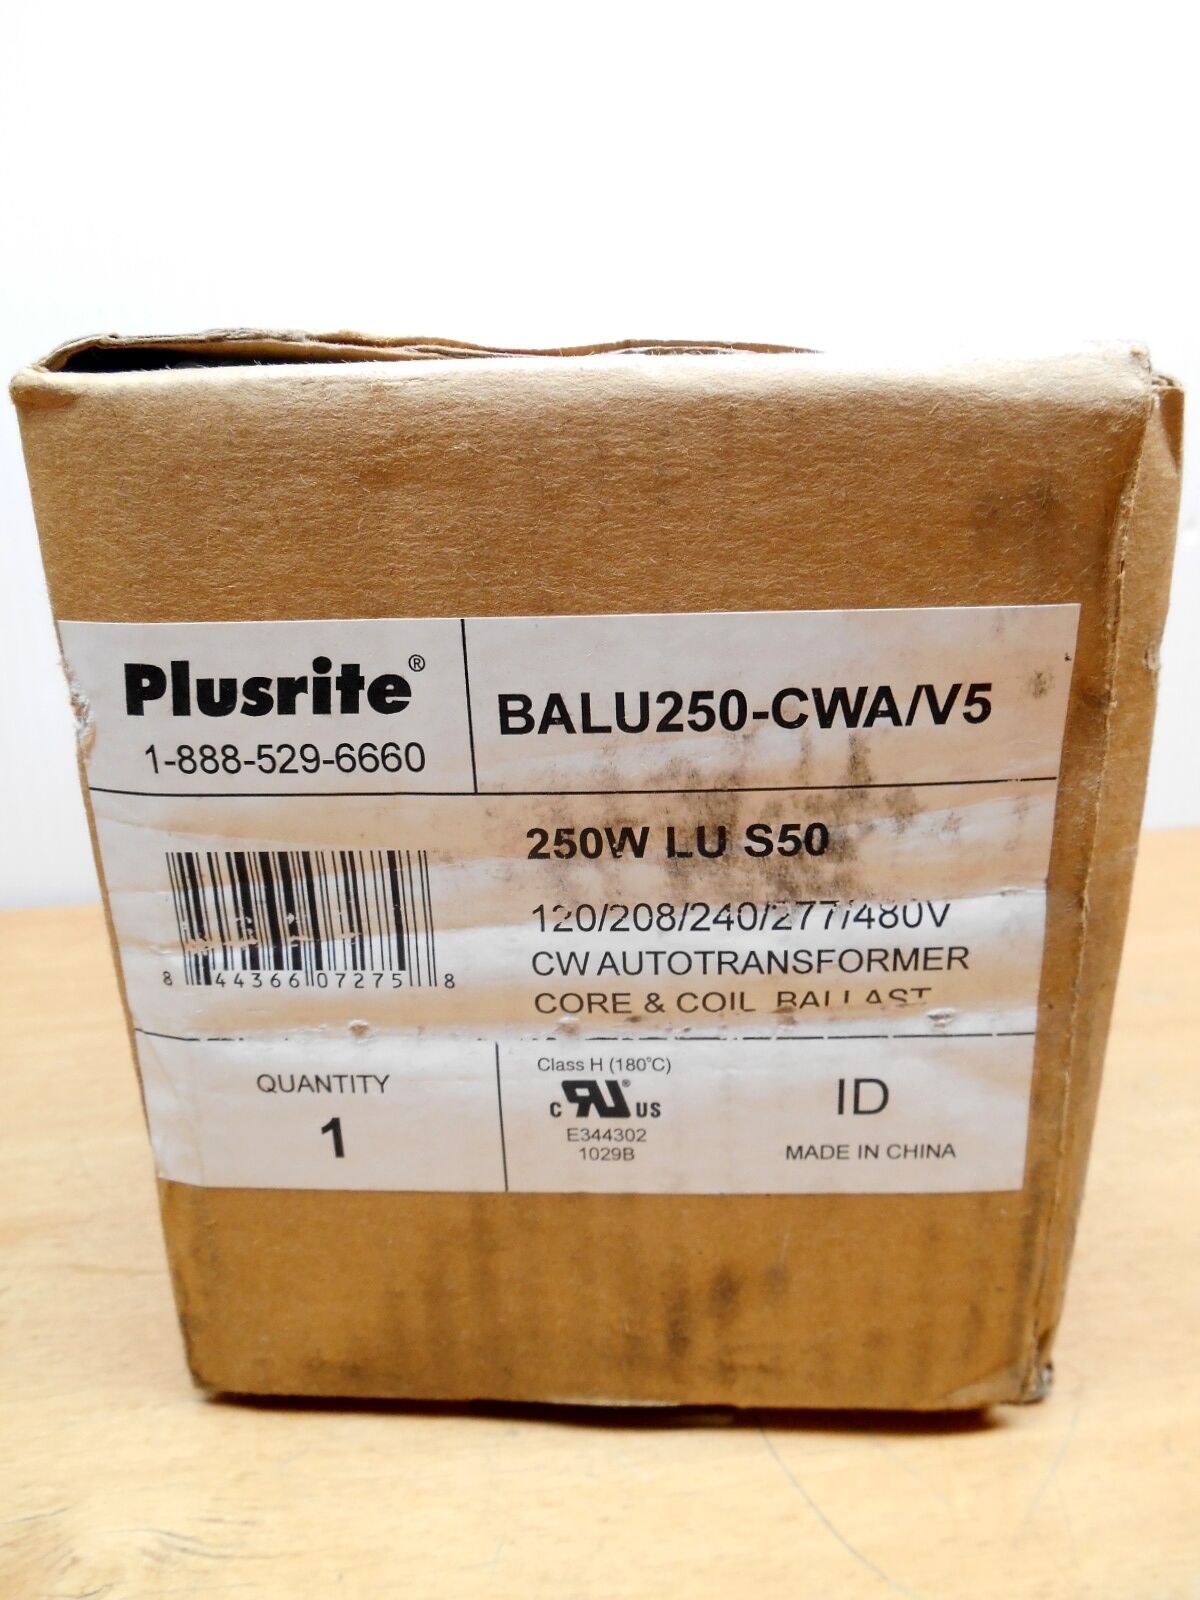 PLUSRITE BALU250-CWA/V5 CW AUTOTRANSFORMER CORE & COIL BALLAST